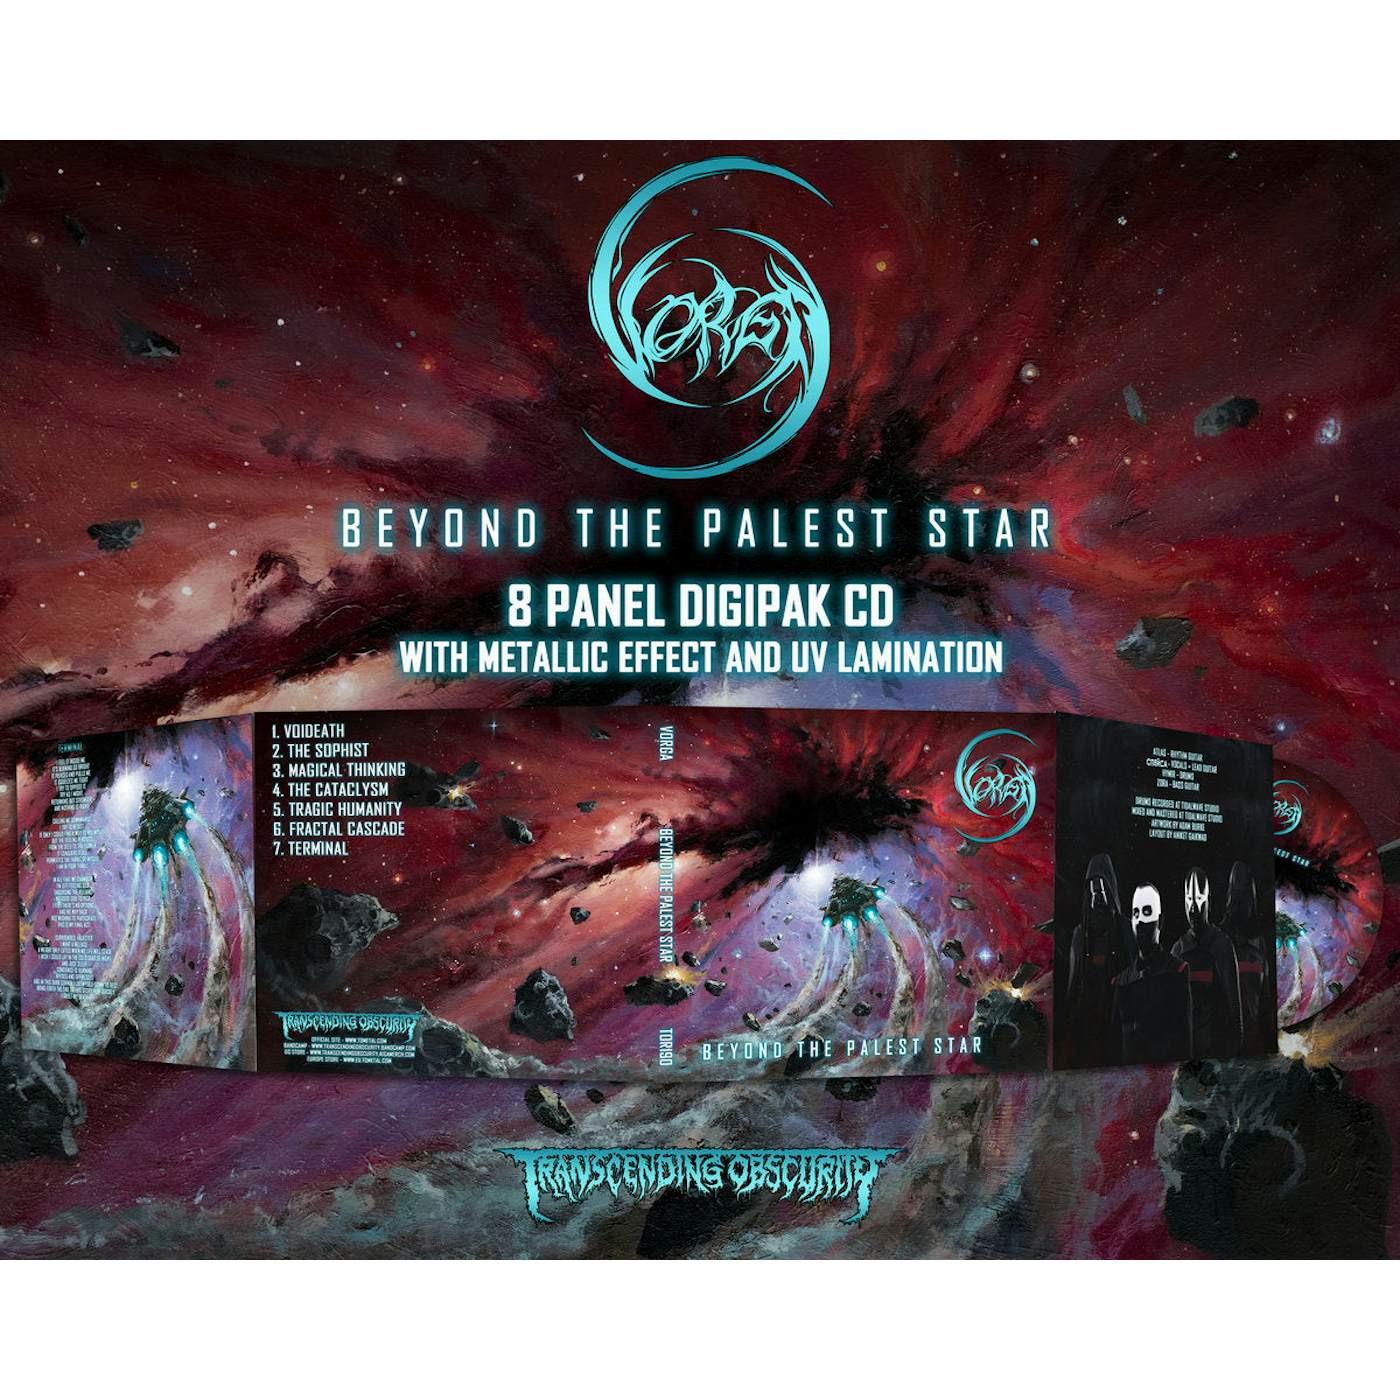 Vorga "Beyond The Palest Star" Hand-numbered Edition CD